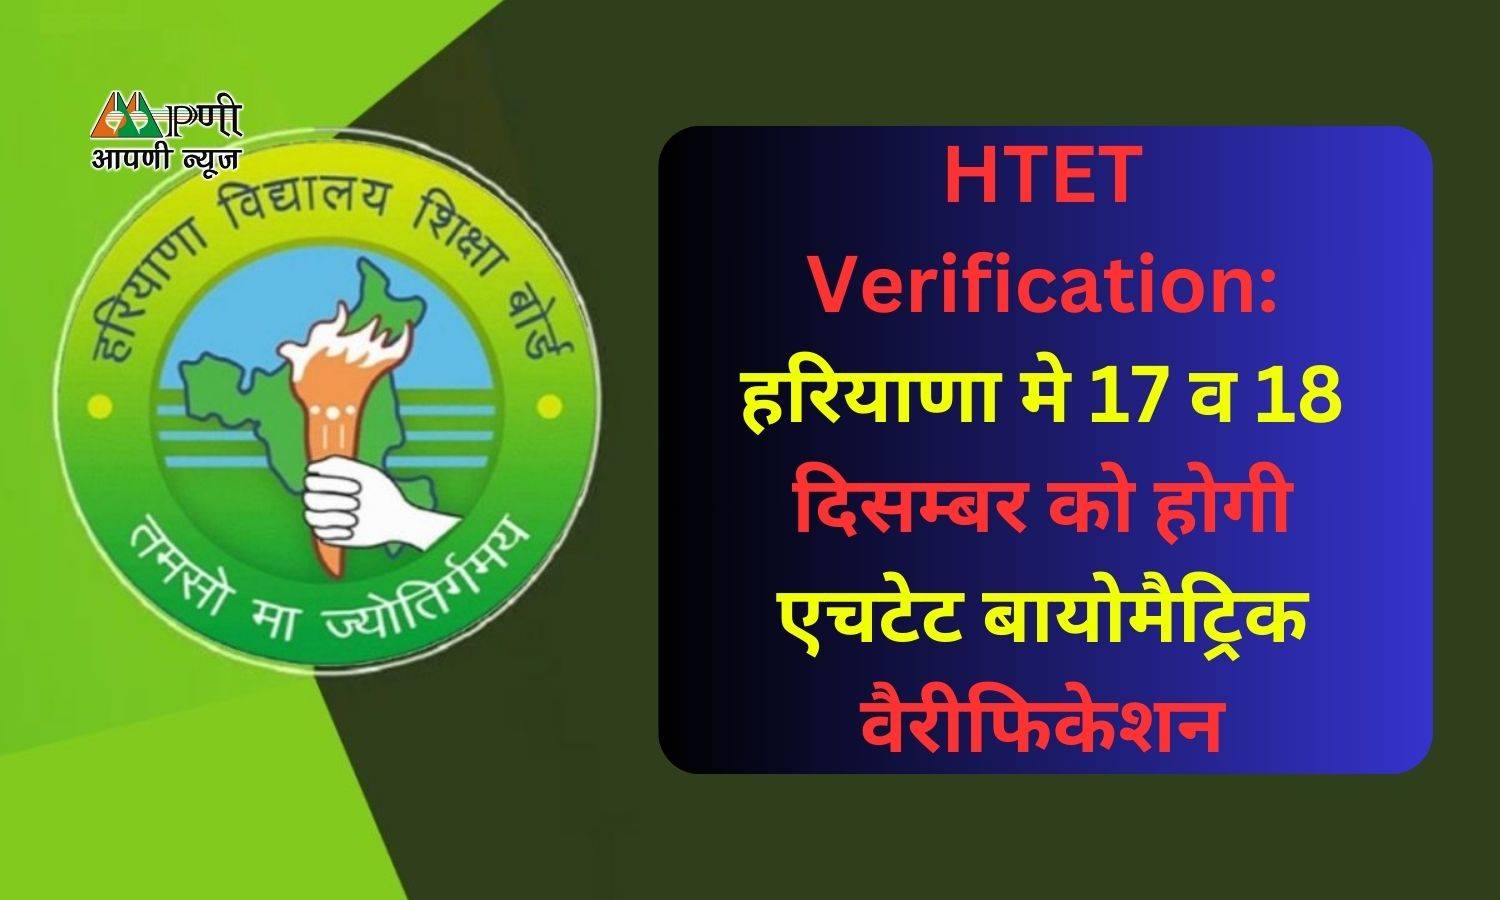 HTET Verification:  हरियाणा मे 17 व 18 दिसम्बर को होगी एचटेट बायोमैट्रिक वैरीफिकेशन